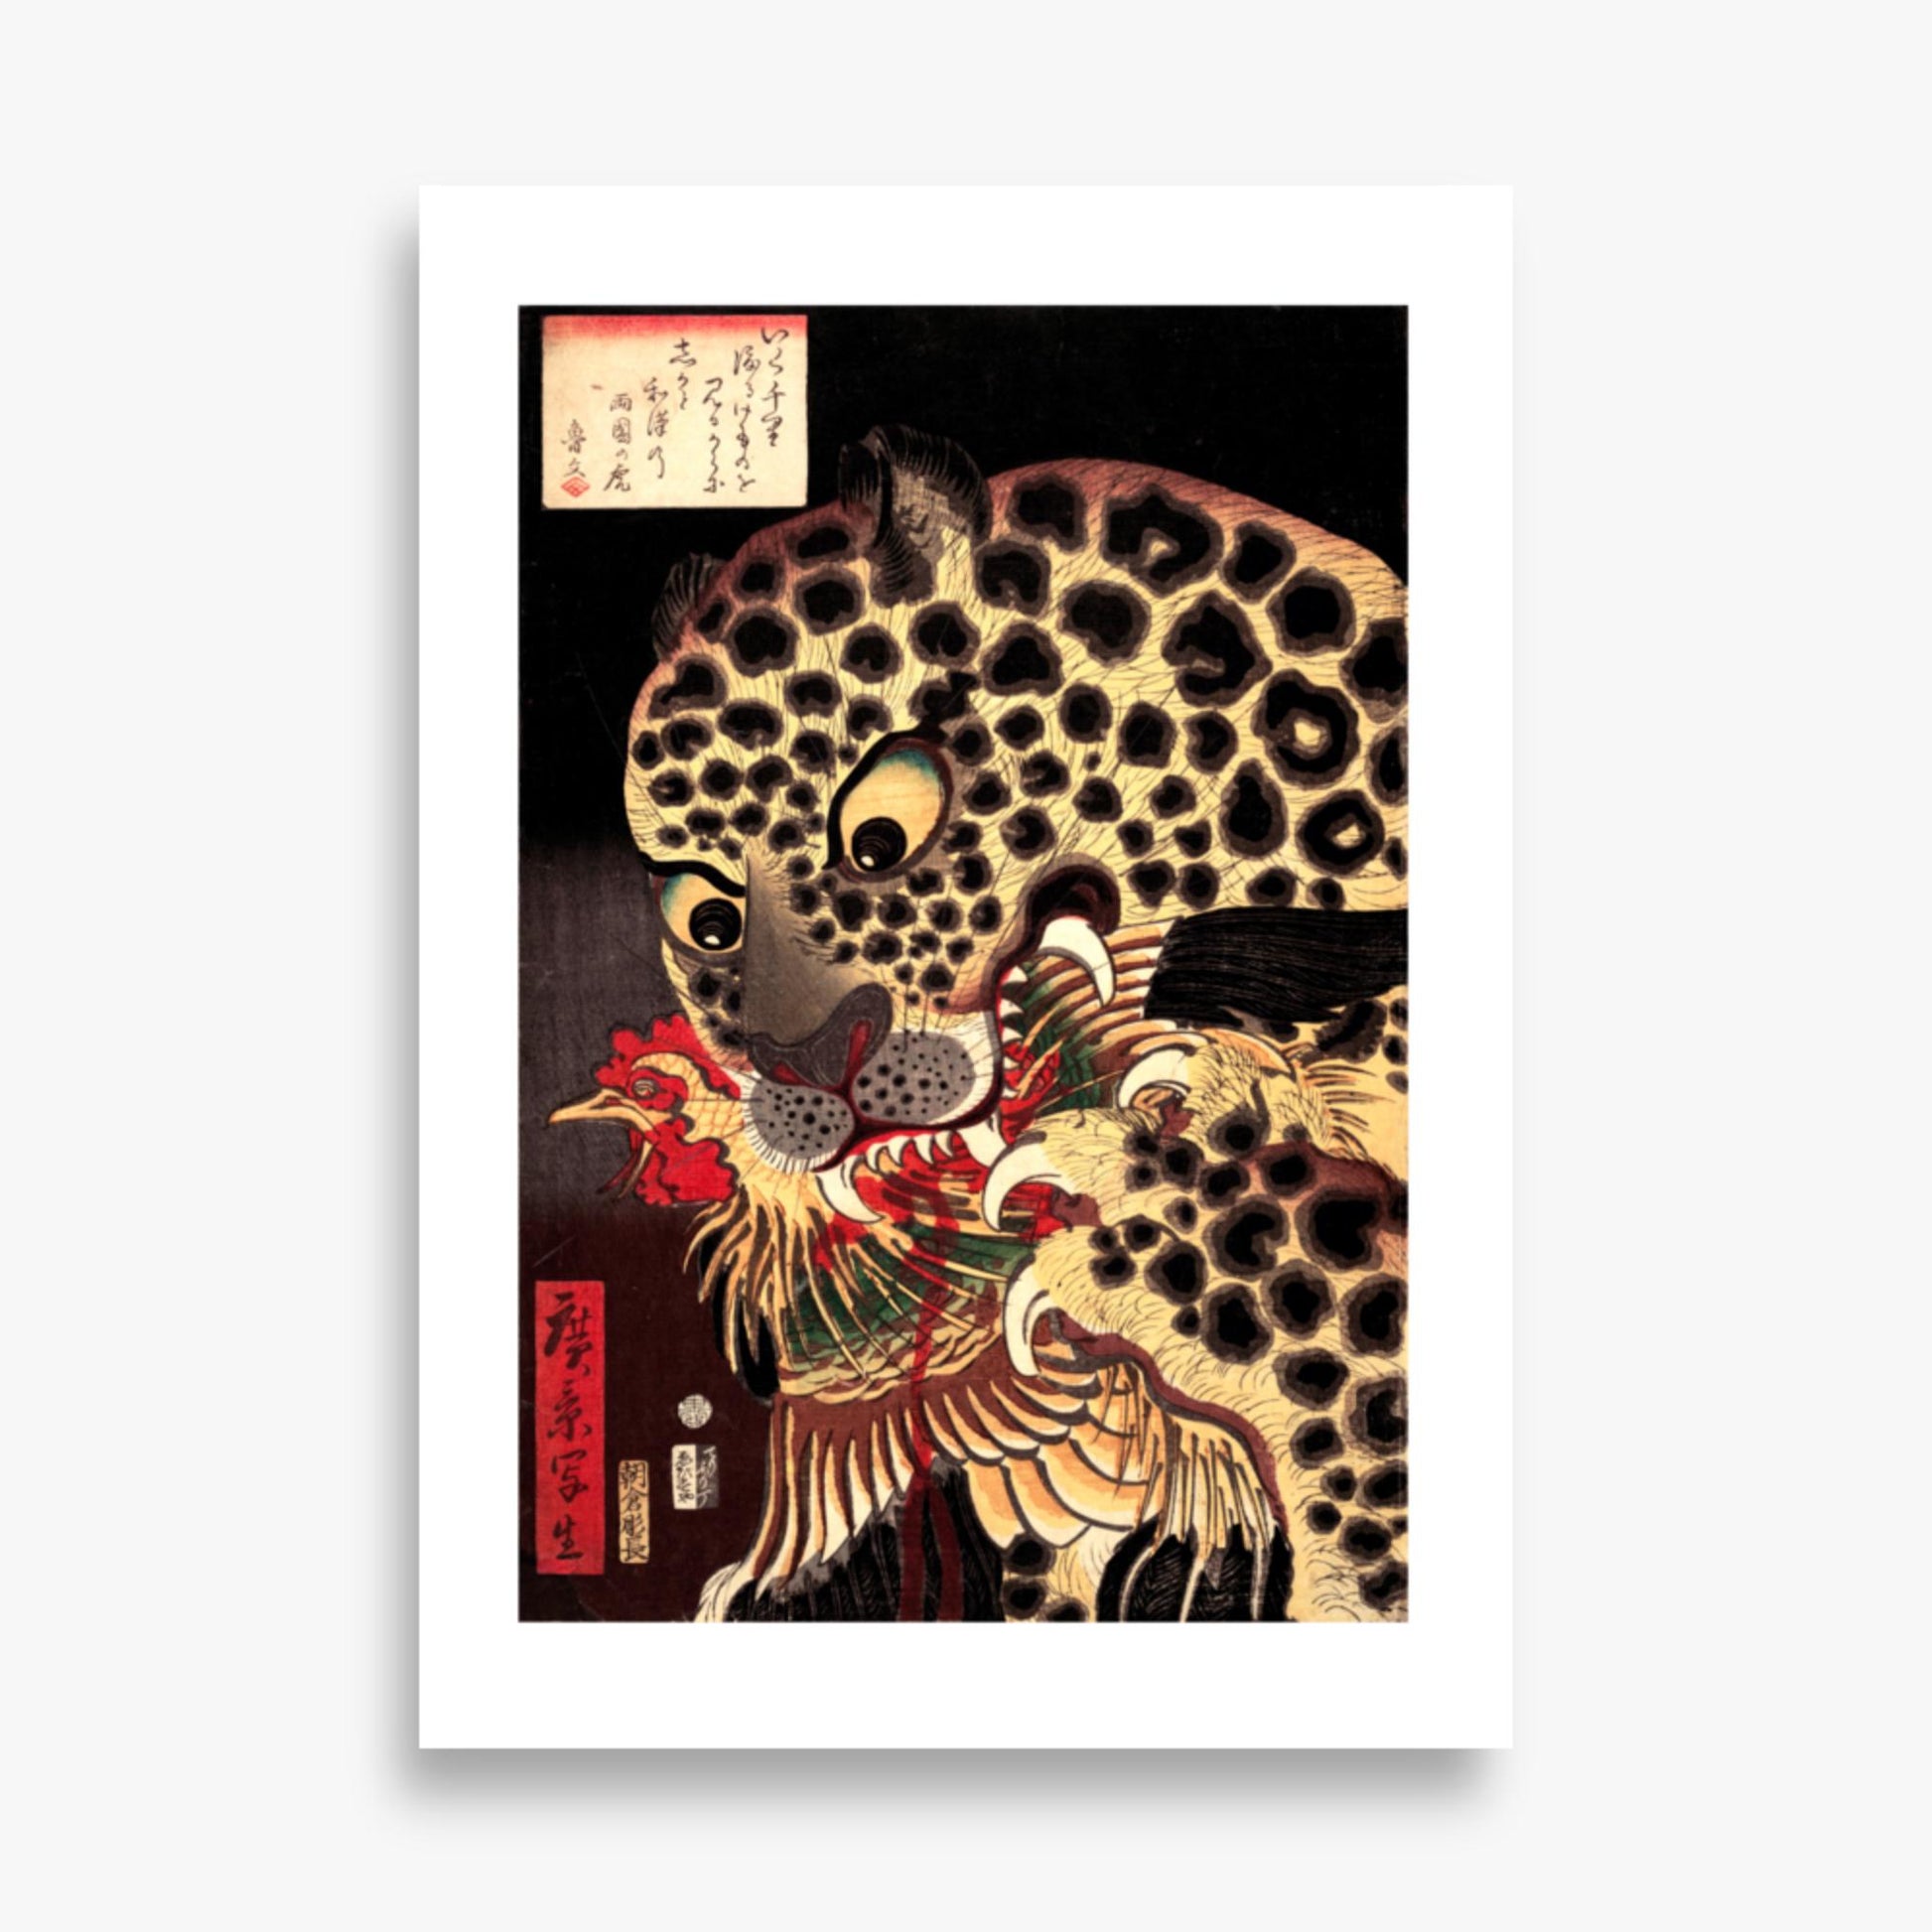 Utagawa Hirokage - The Tiger of Ryōkoku 70x100 cm Poster